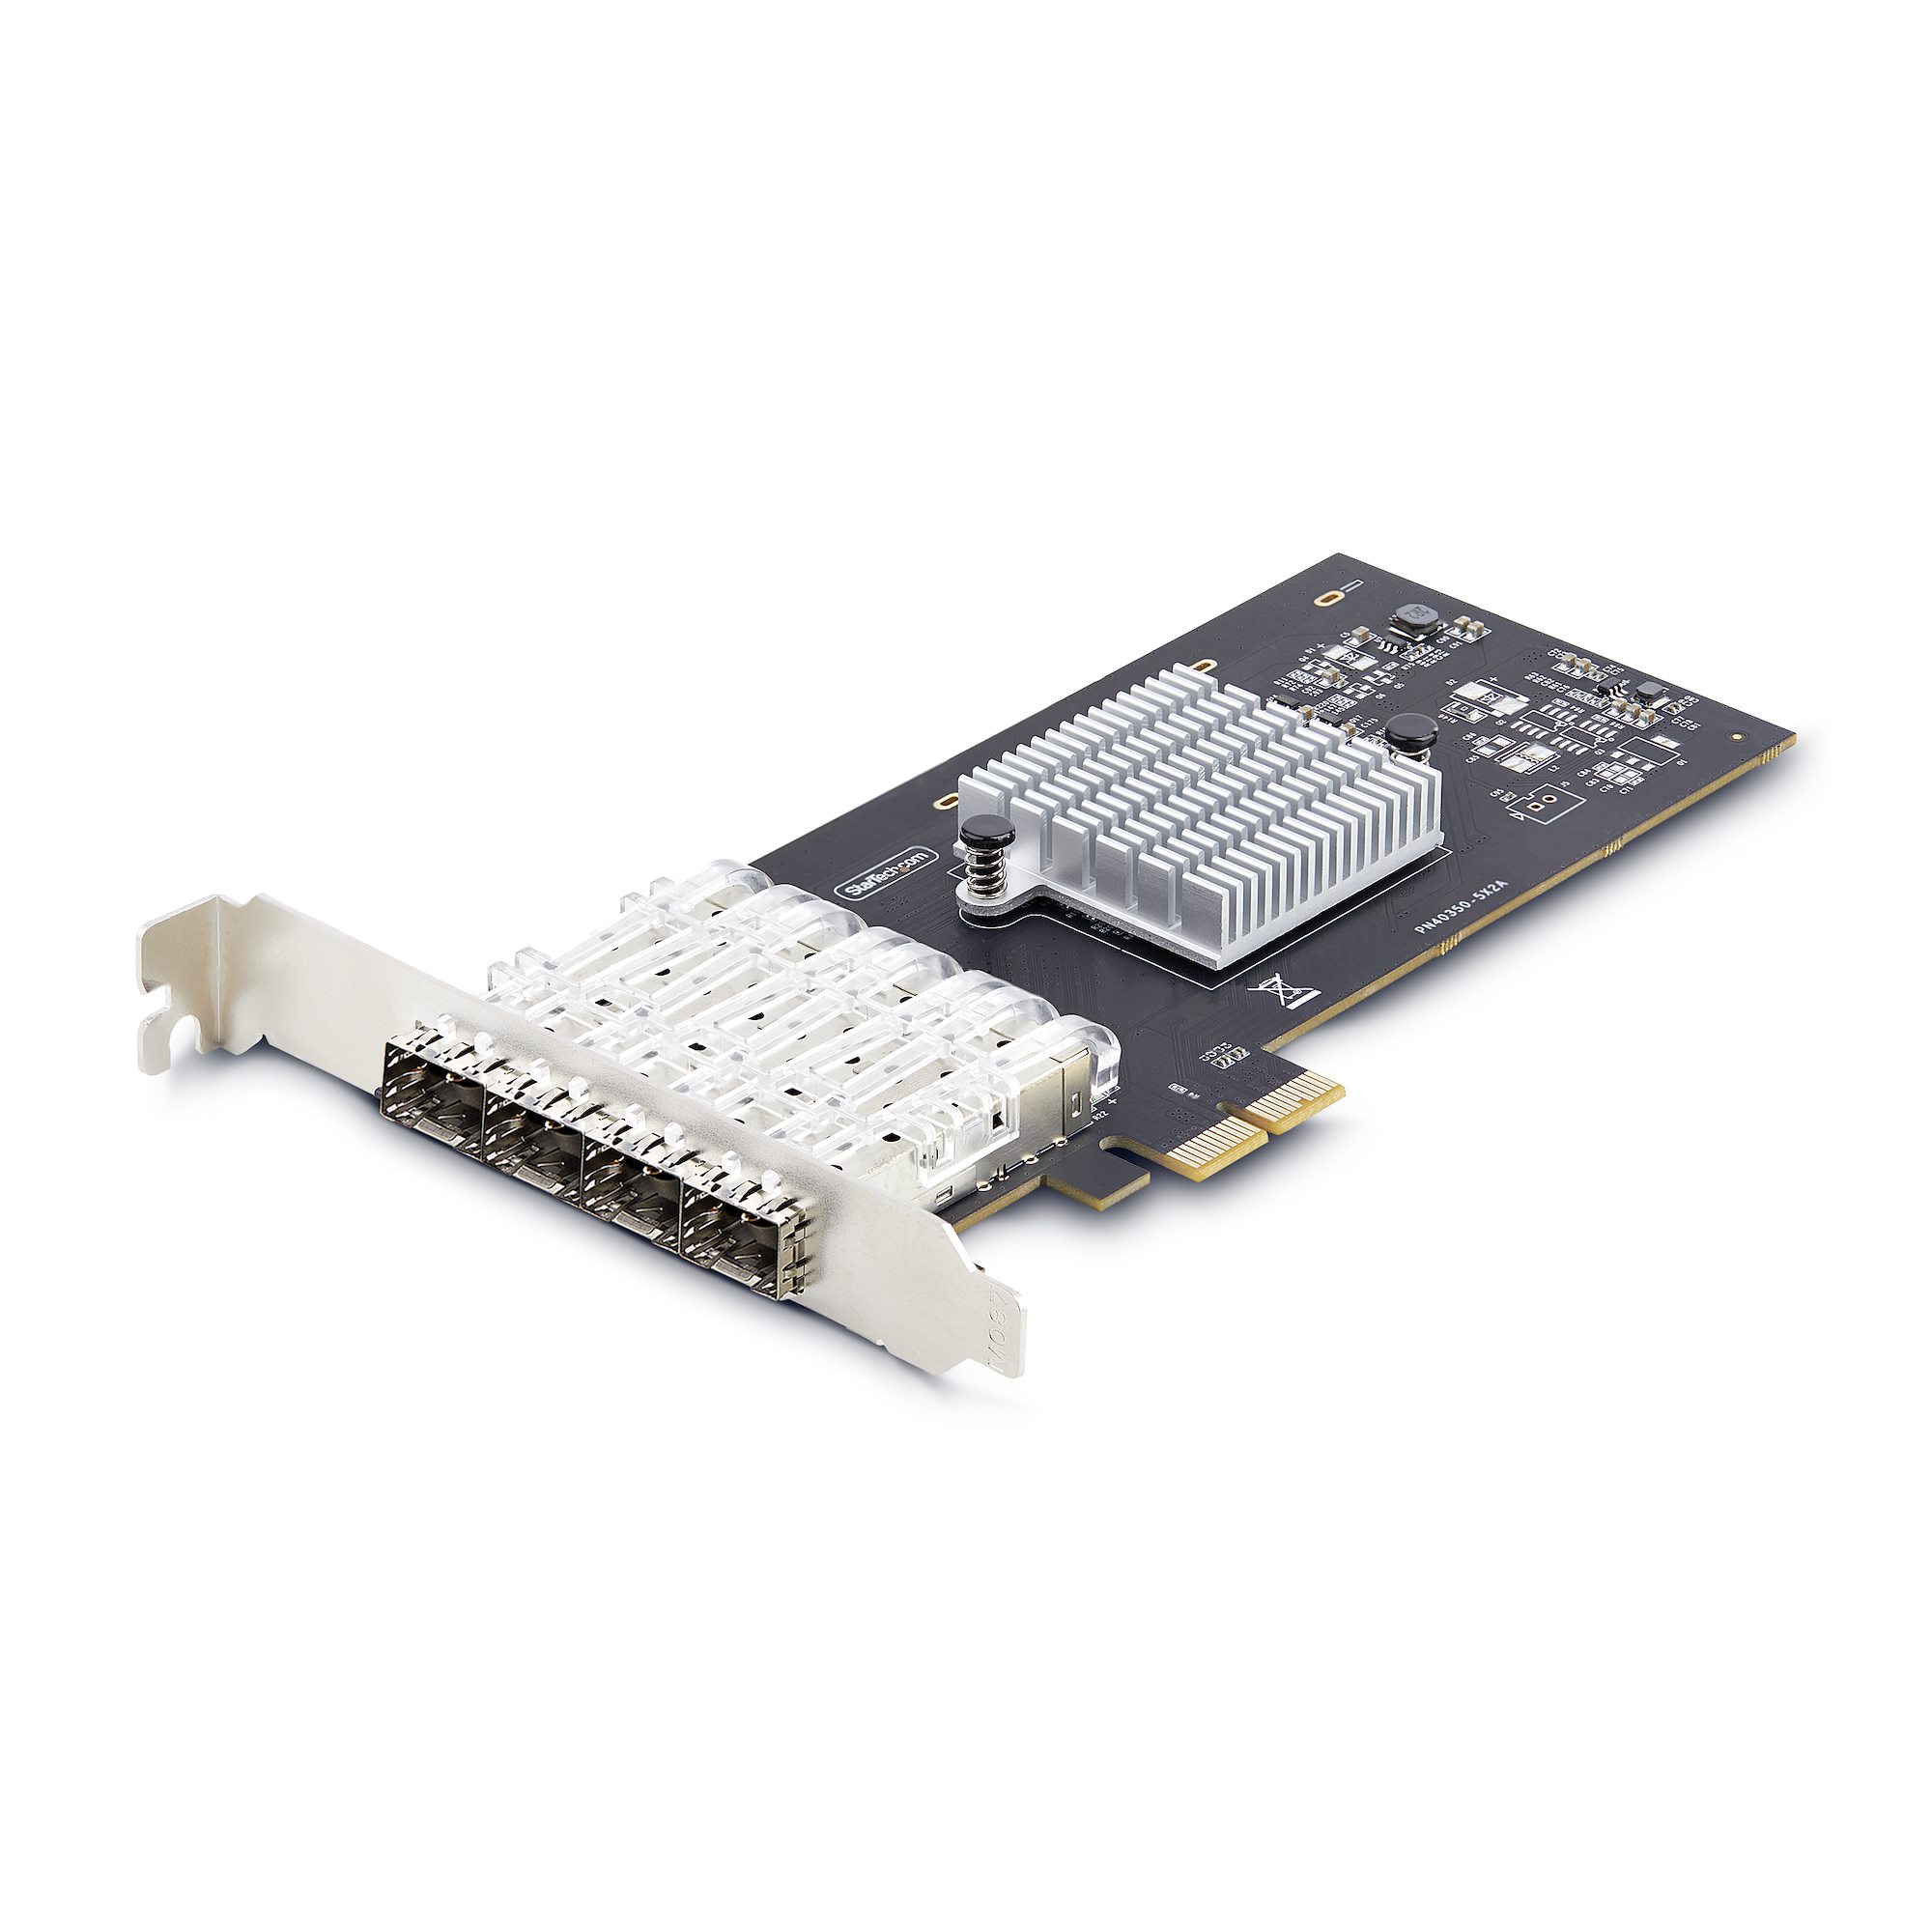 4-Port GbE SFP Network Card, PCIe 2.0 x2, Intel I350-AM4 4x 1GbE  Controller, 1000BASE Copper/Fiber Optic, Quad-Port Gigabit Ethernet NIC,